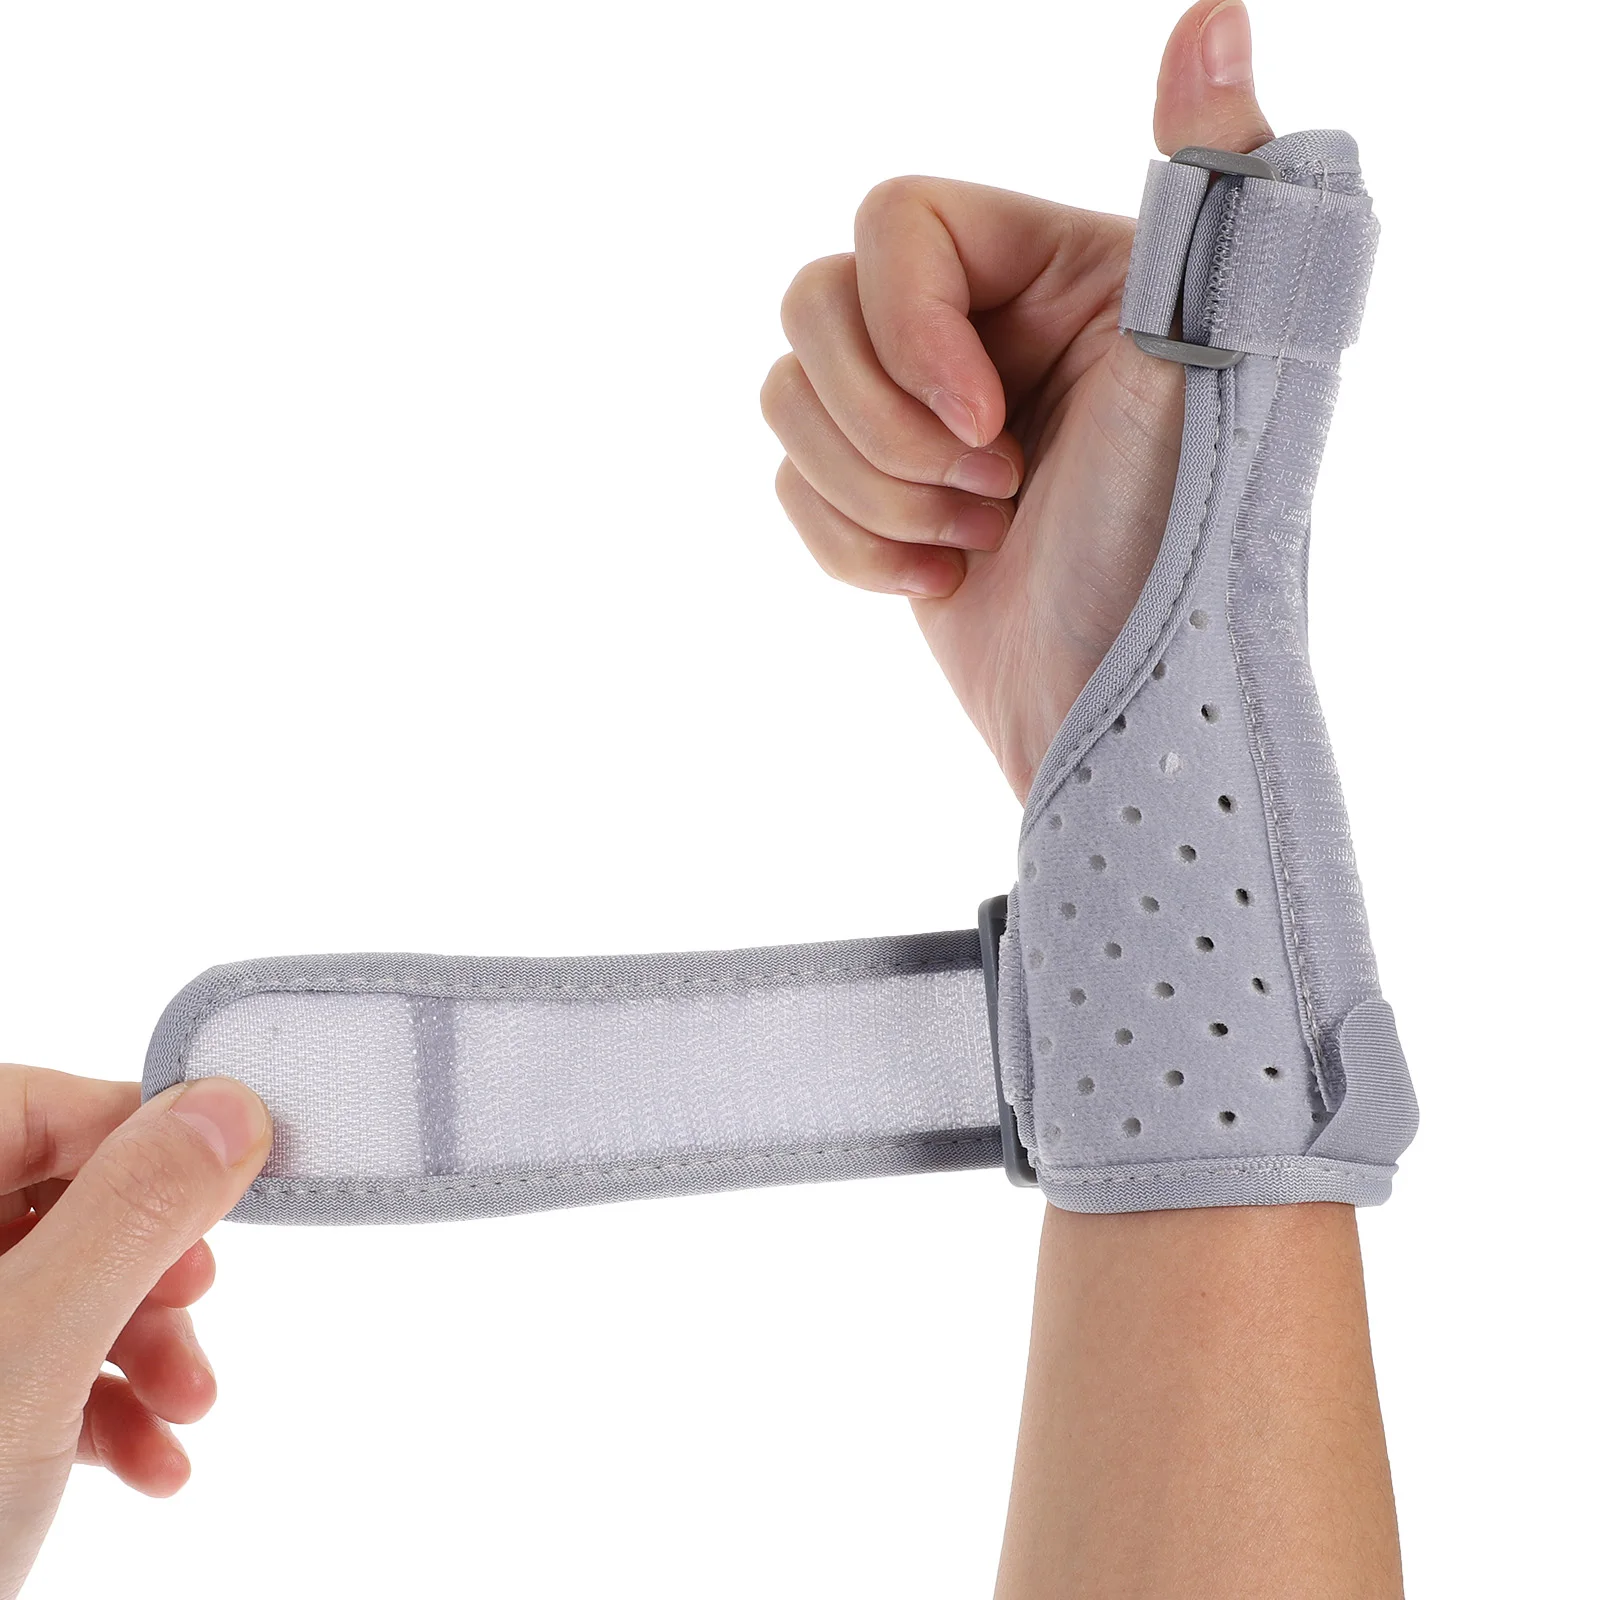 

1PC Thumb Brace Splint Wrist Support Arthritis Finger Spica Stabilizer Hand Trigger Carpal Tunnel Holder Wraps Right Immobilizer